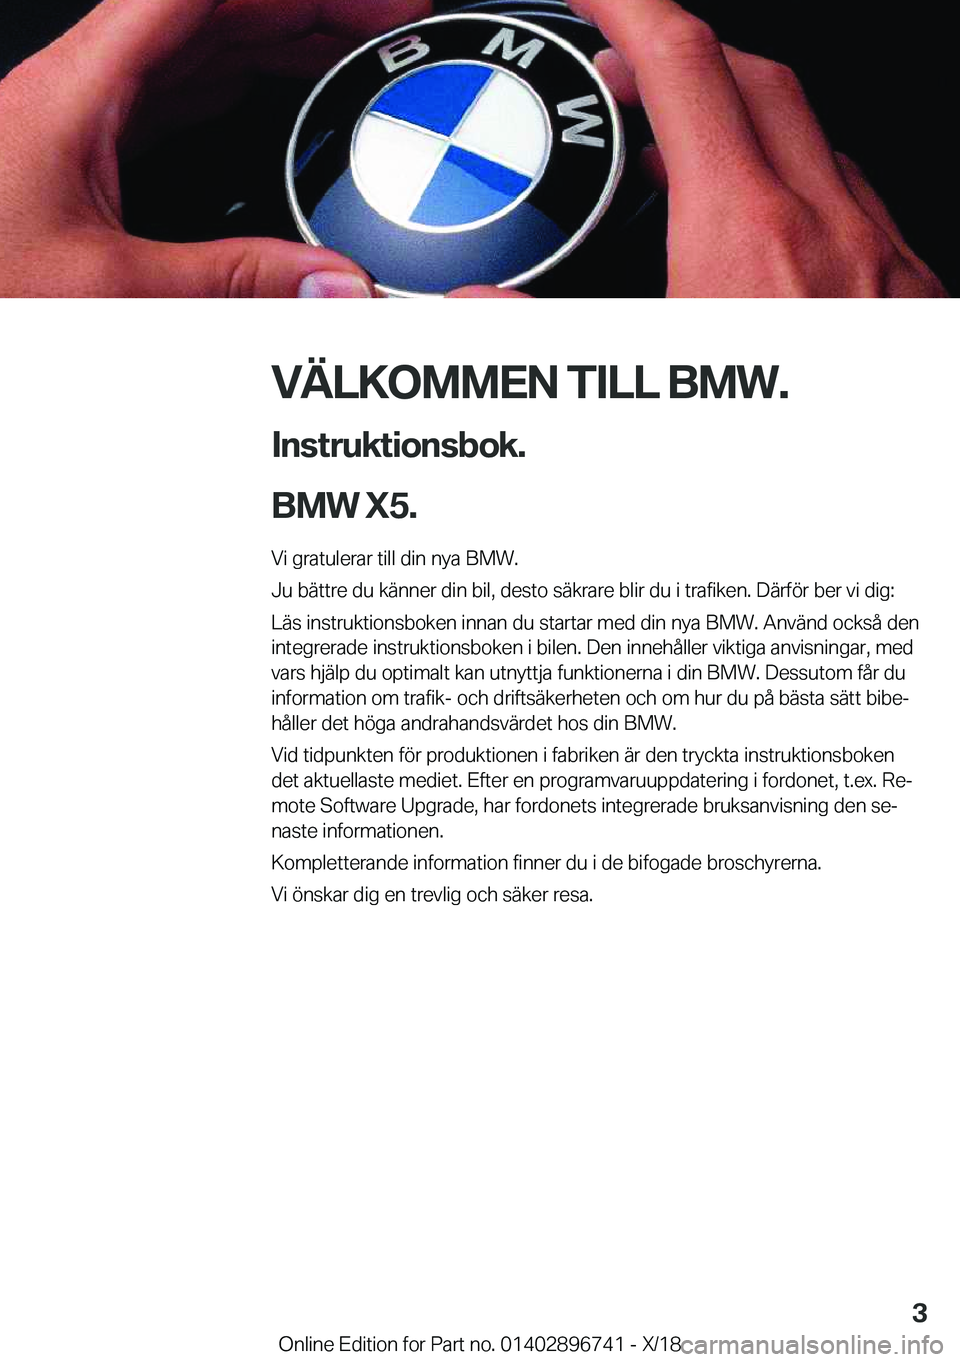 BMW X5 2019  InstruktionsbÖcker (in Swedish) �V�Ä�L�K�O�M�M�E�N��T�I�L�L��B�M�W�.�I�n�s�t�r�u�k�t�i�o�n�s�b�o�k�.
�B�M�W��X�5�.
�V�i��g�r�a�t�u�l�e�r�a�r��t�i�l�l��d�i�n��n�y�a��B�M�W�.
�J�u��b�ä�t�t�r�e��d�u��k�ä�n�n�e�r��d�i�n�